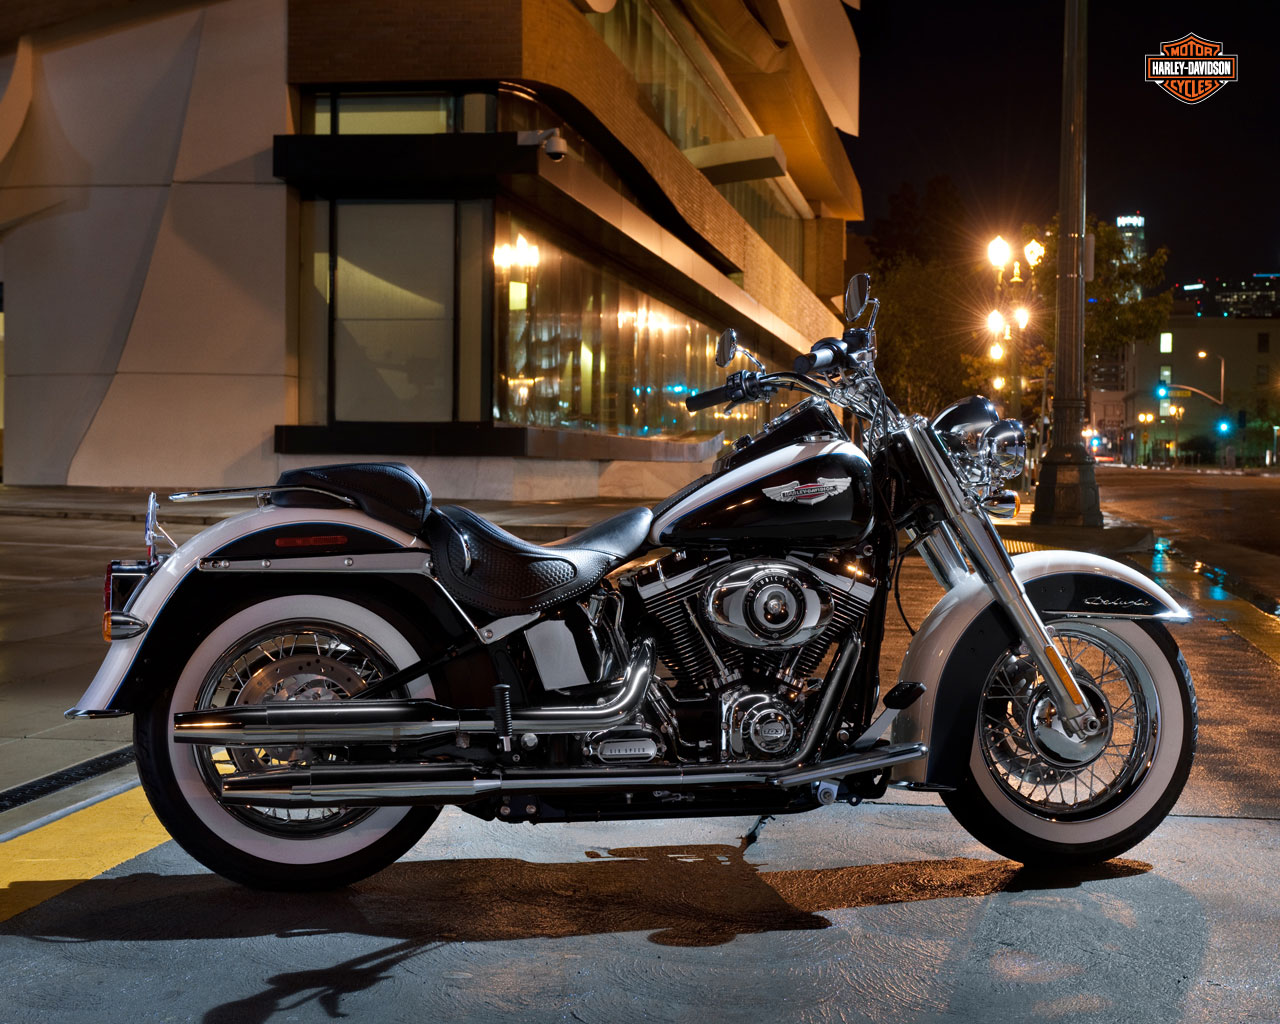 Harley-Davidson Softail Deluxe #5